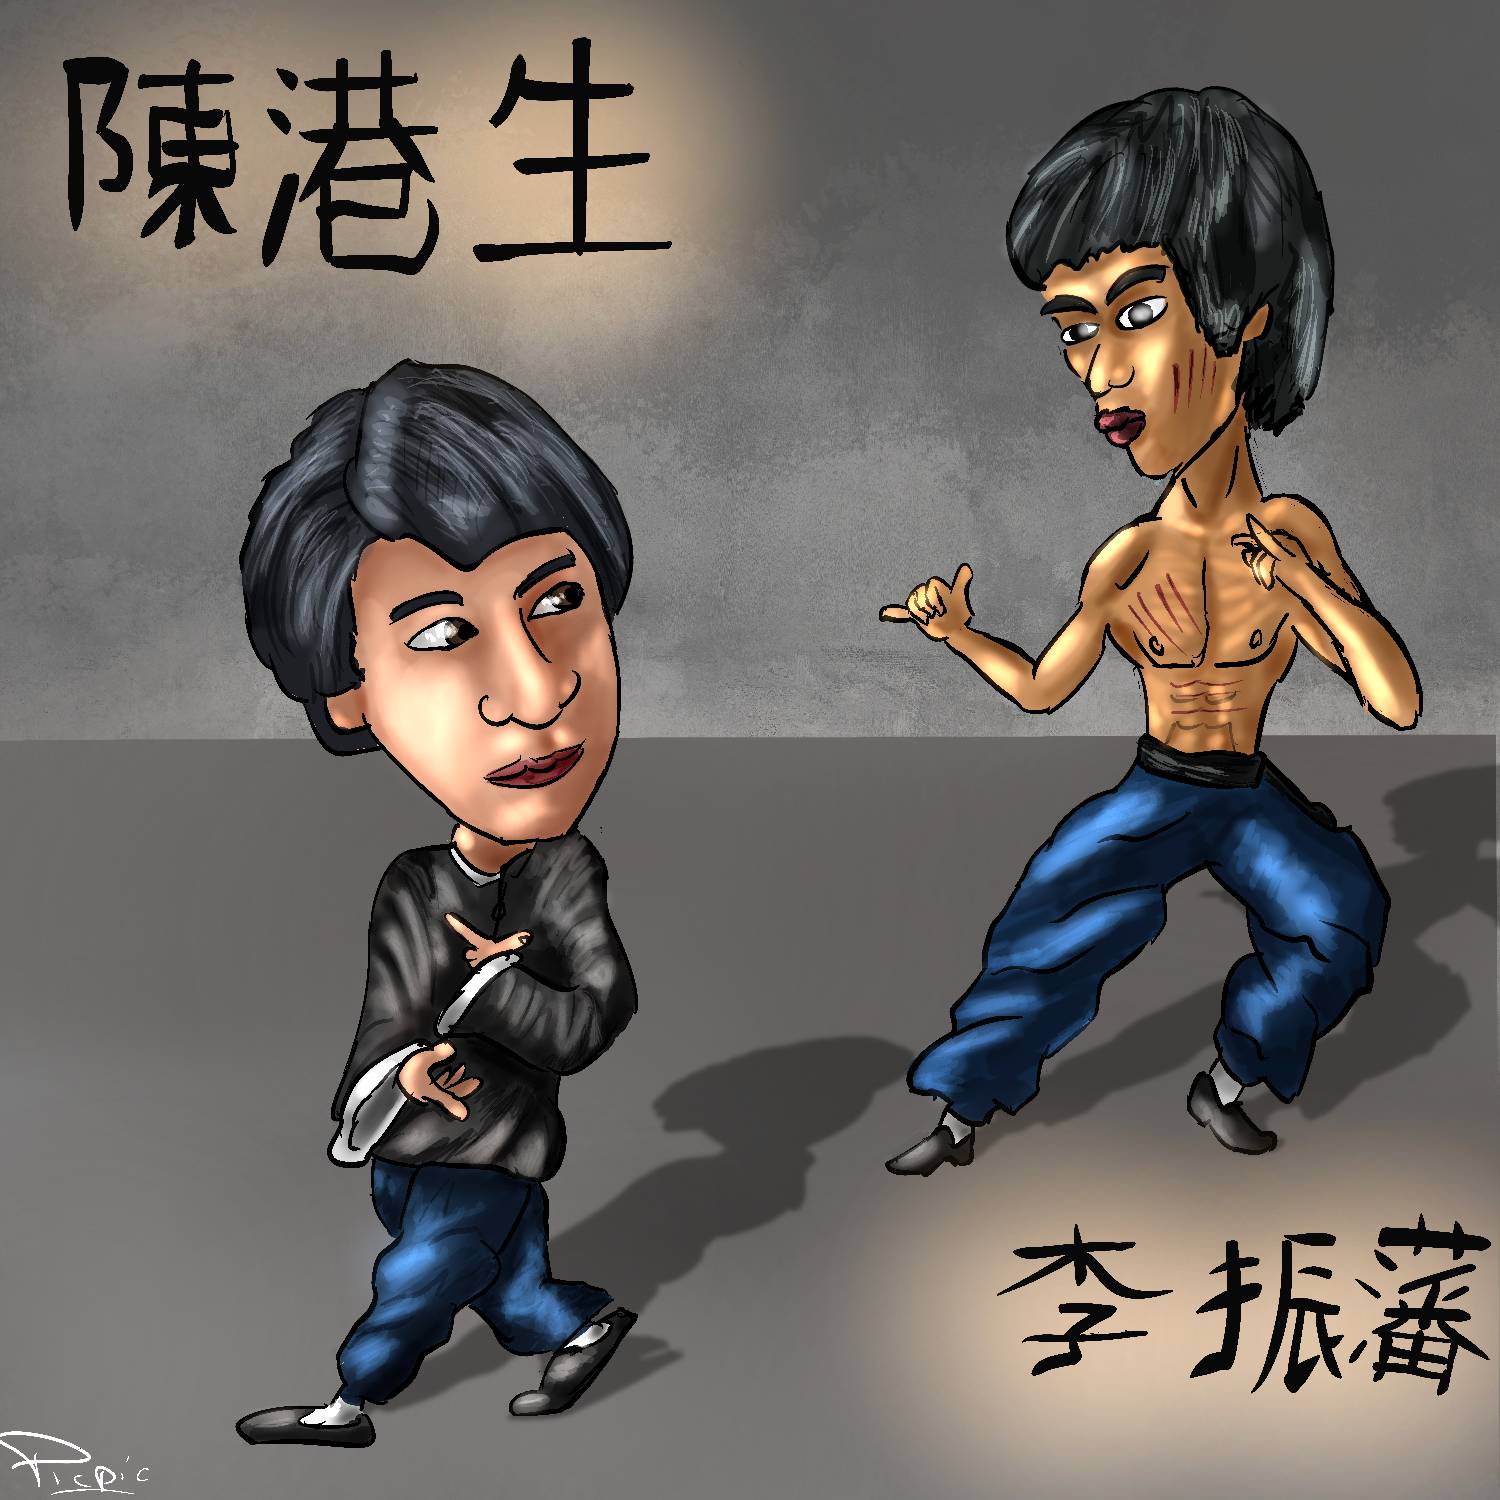 Jackie Chan vs Bruce Lee by Pikachu1303 on DeviantArt